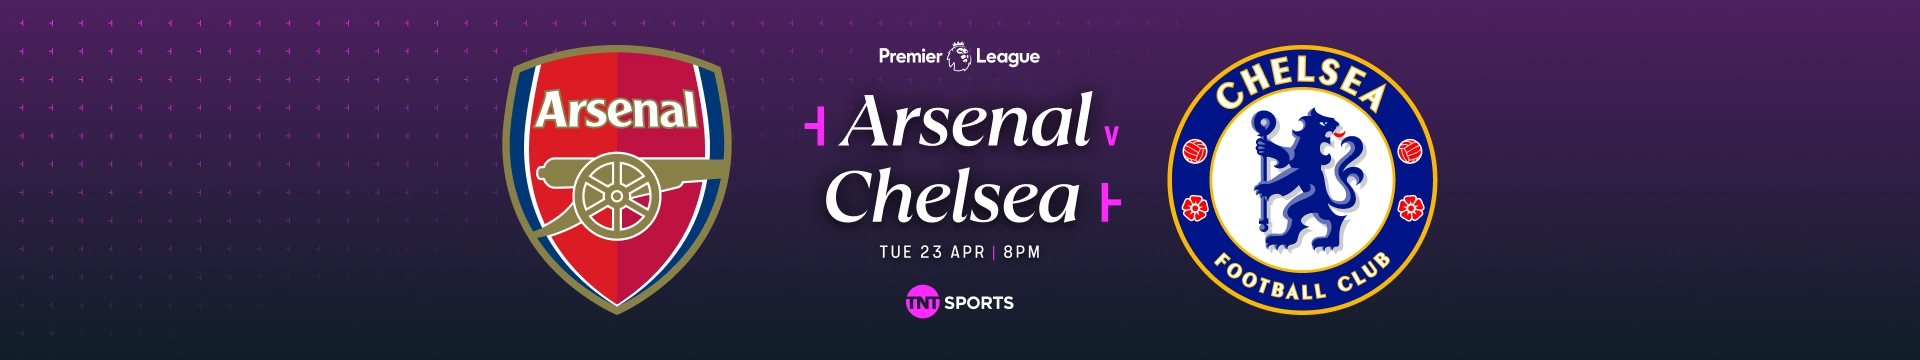 Arsenal v Chelsea Tuesday 23 April at 8pm